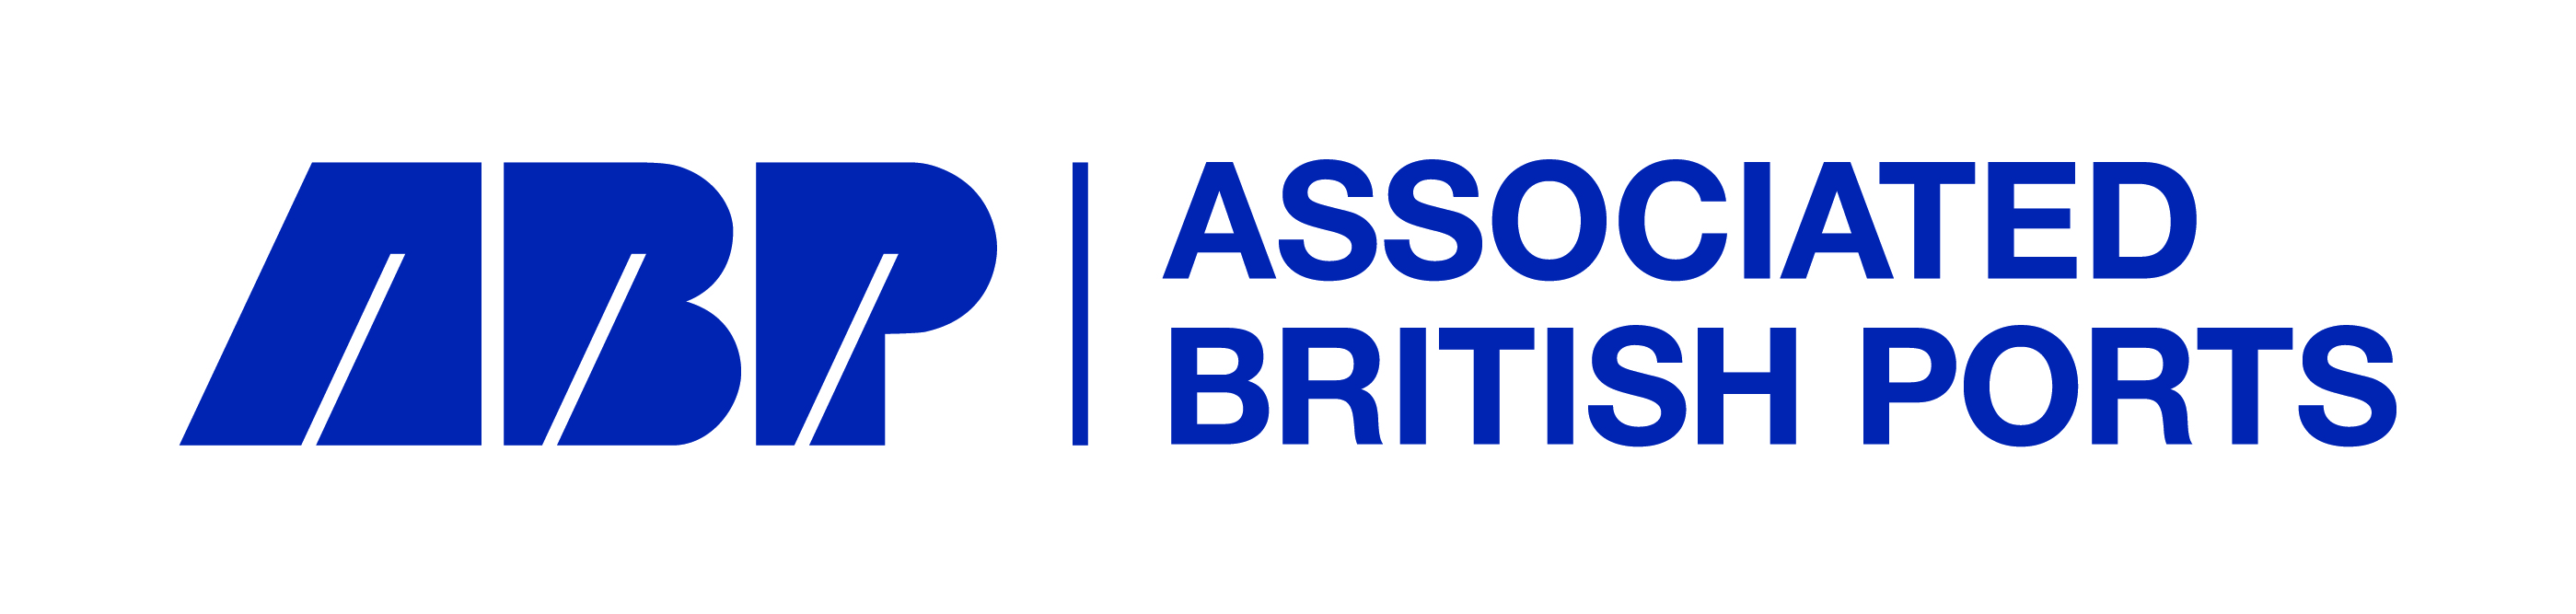 ABP-Associated-British-Ports-CMYK-Blue